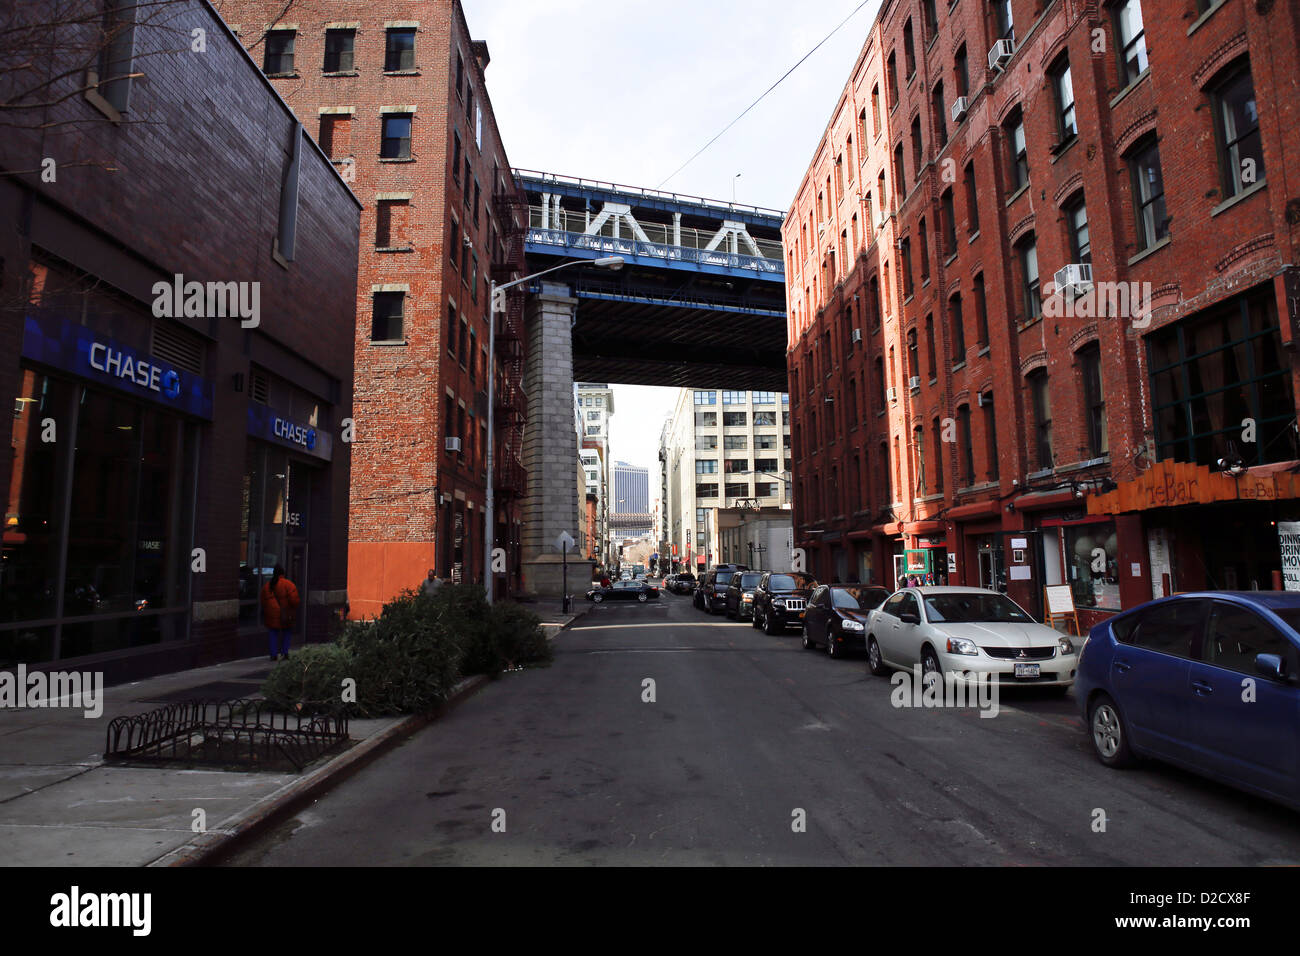 DUMBO (Down under the Manhattan Bridge) Neighborhood, Brooklyn, NY, USA, Approach to the Bridge passing over a street Stock Photo